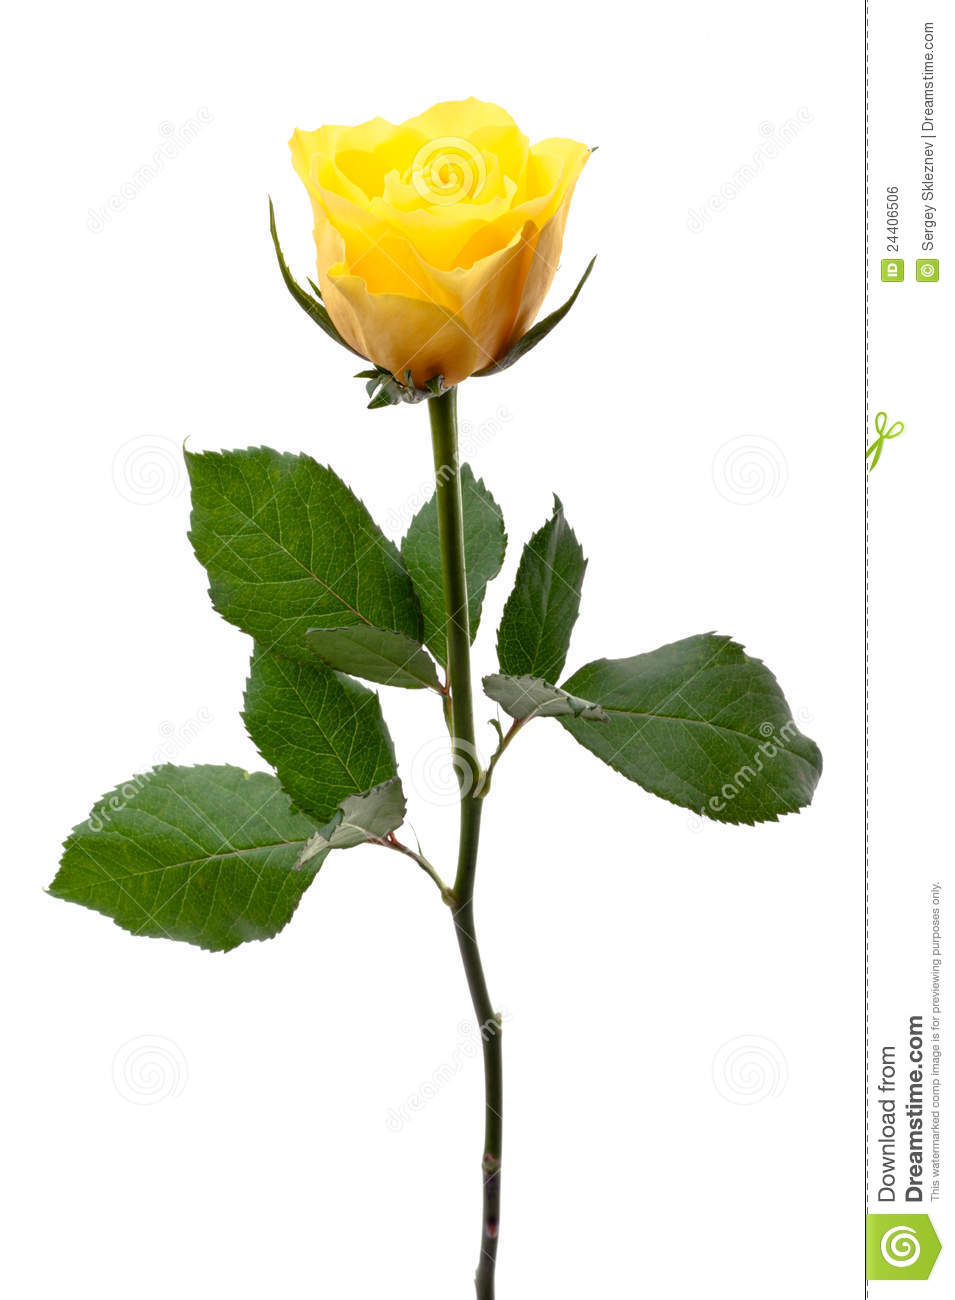 Single Yellow Rose Royalty Free Stock Image   Image  24406506